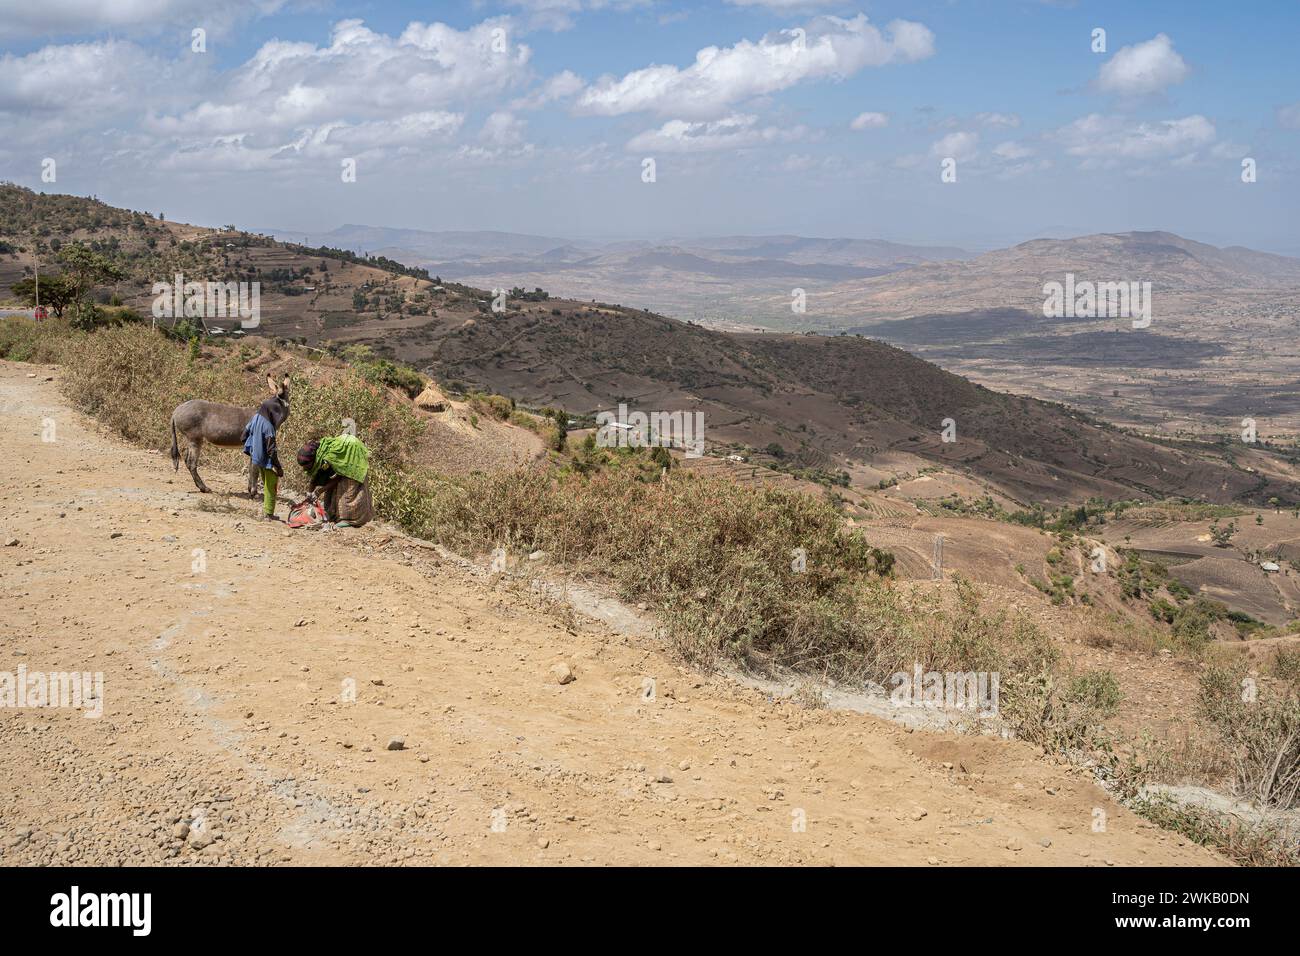 Landscape in the ethiopian highlands, Ethiopia, Africa Stock Photo